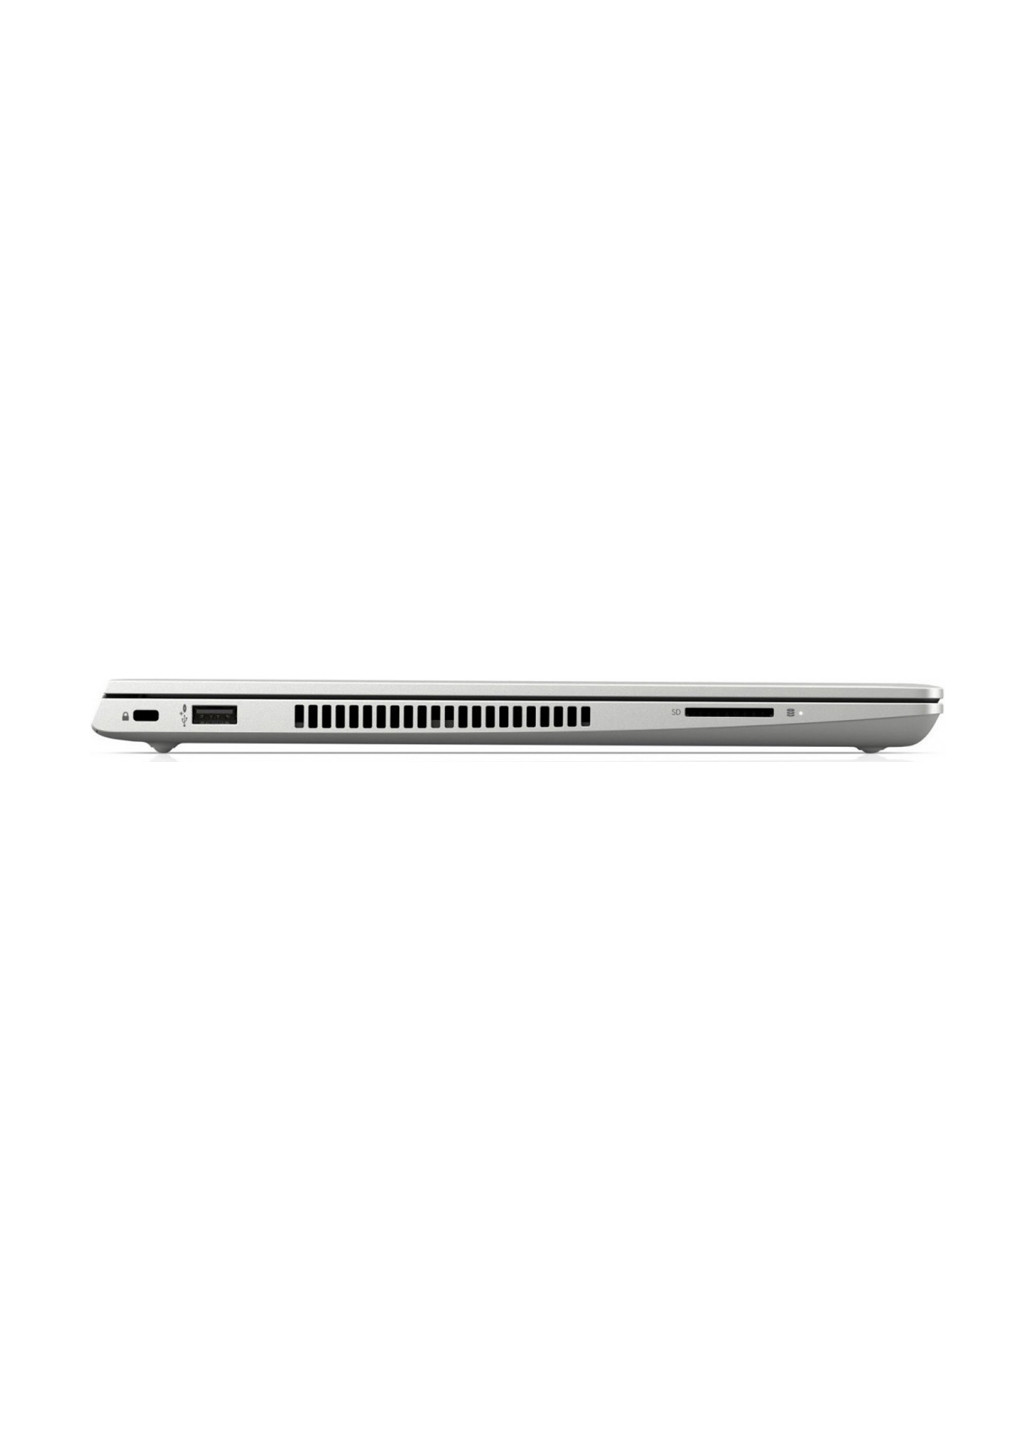 Ноутбук HP probook 440 g6 (4rz57av_v8) silver (173921901)